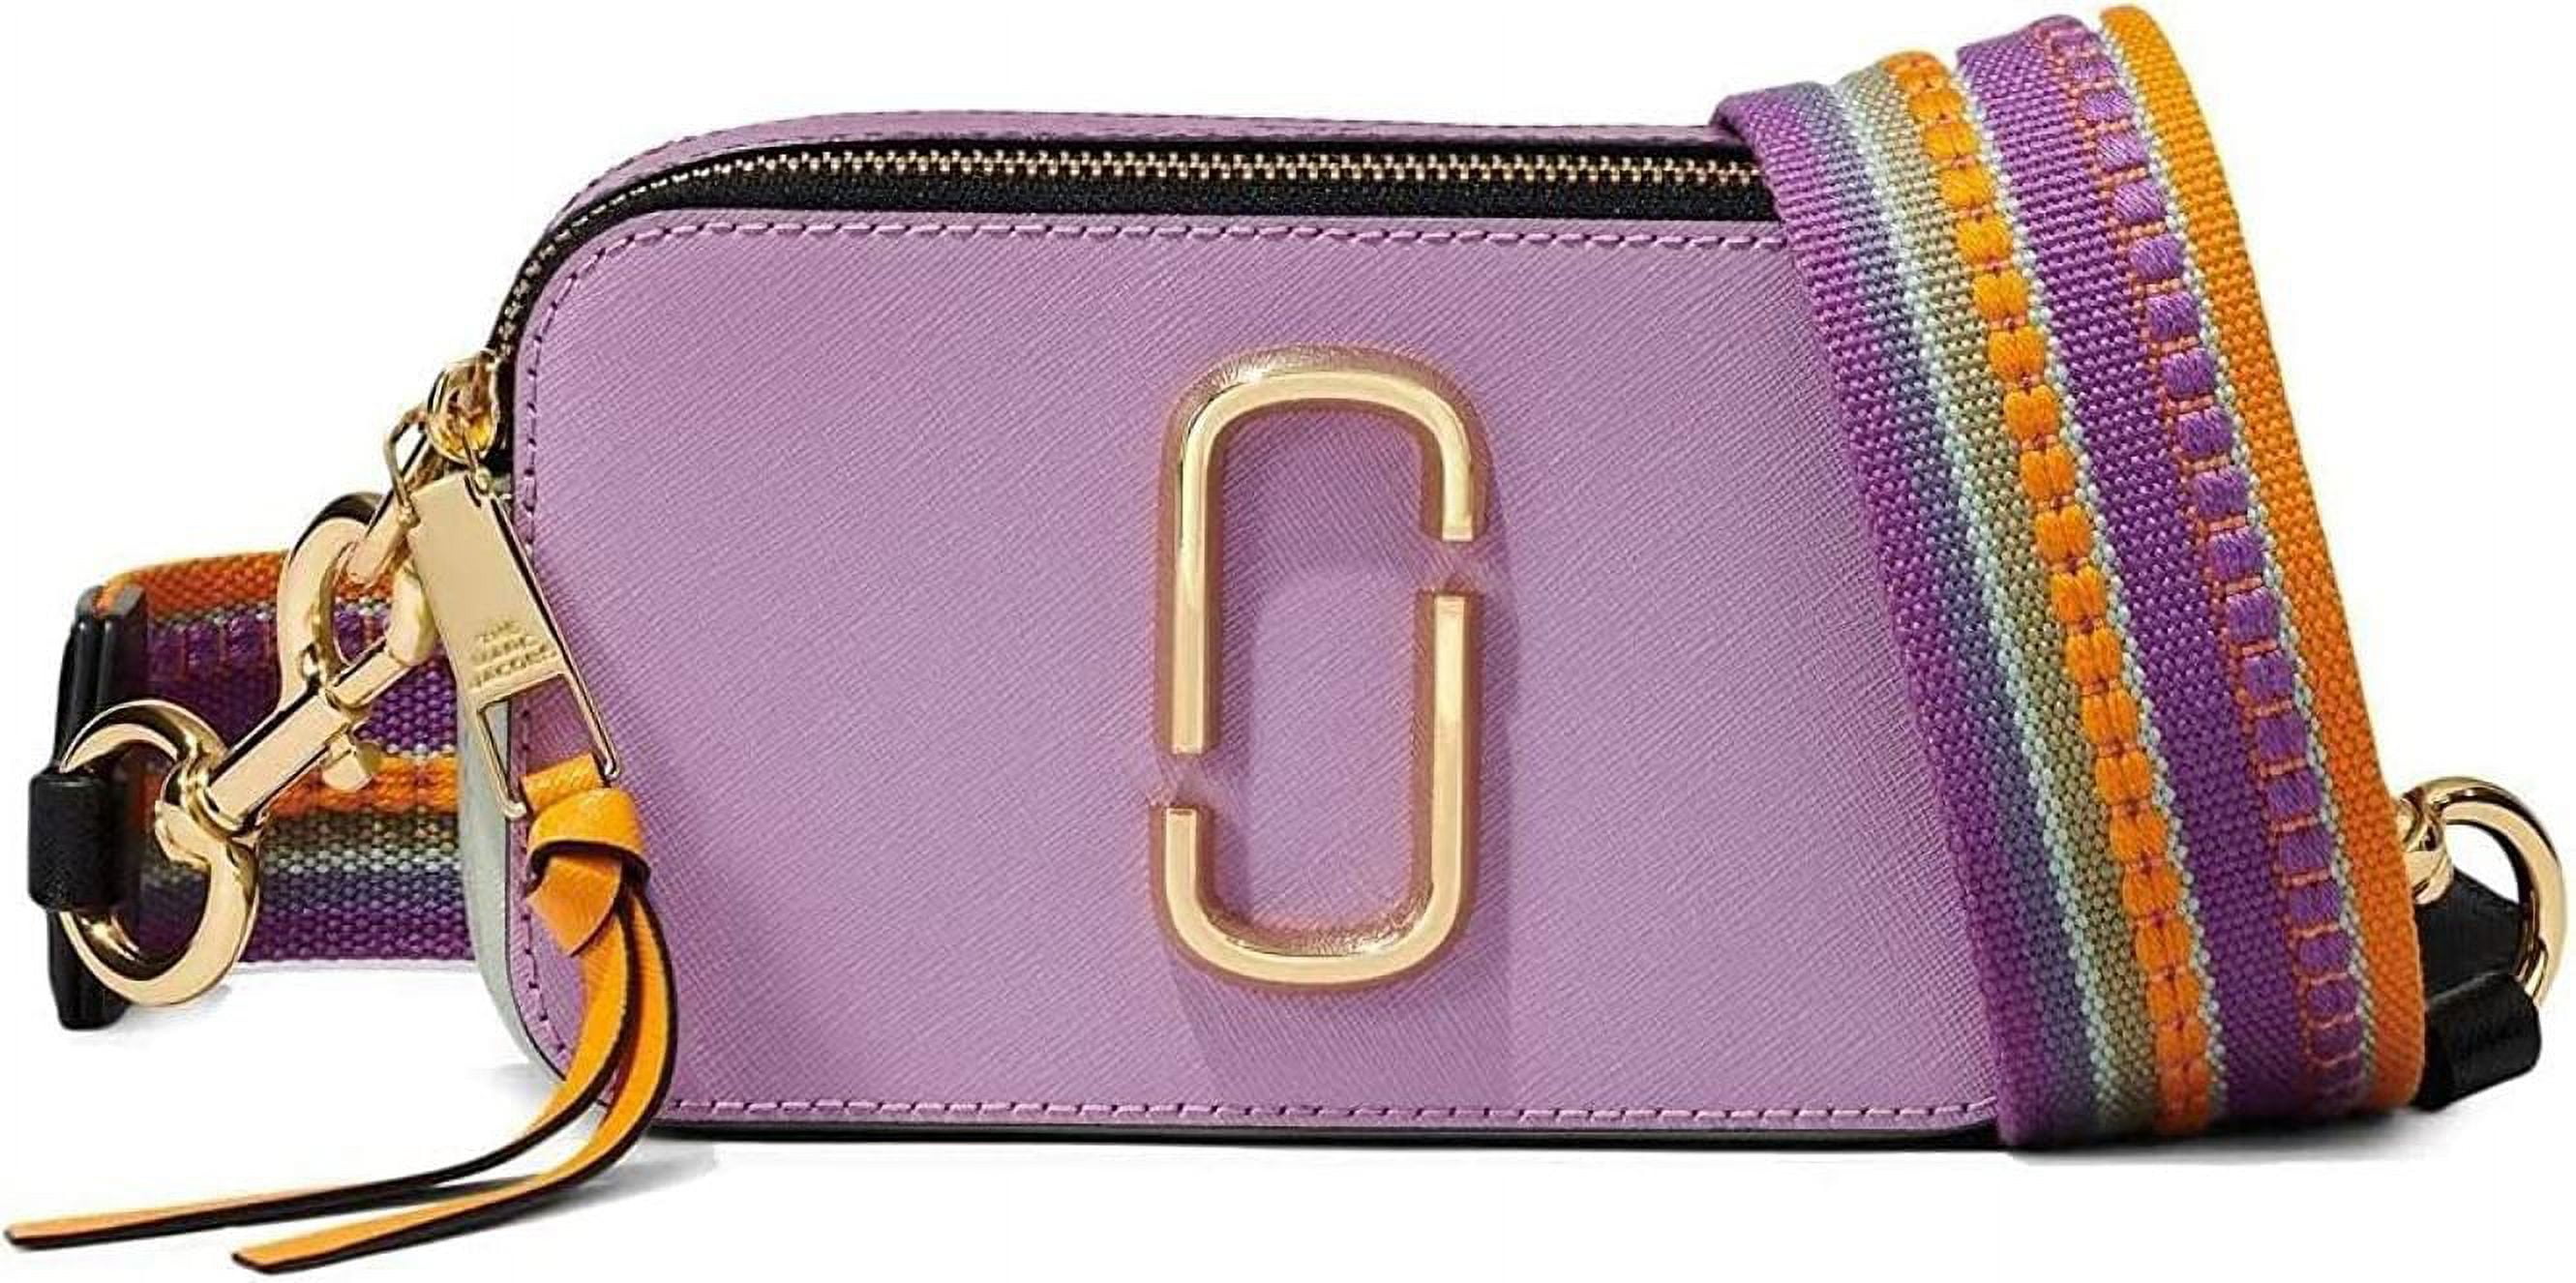 Marc Jacobs Colorblock Snapshot Shoulder Bag in Purple